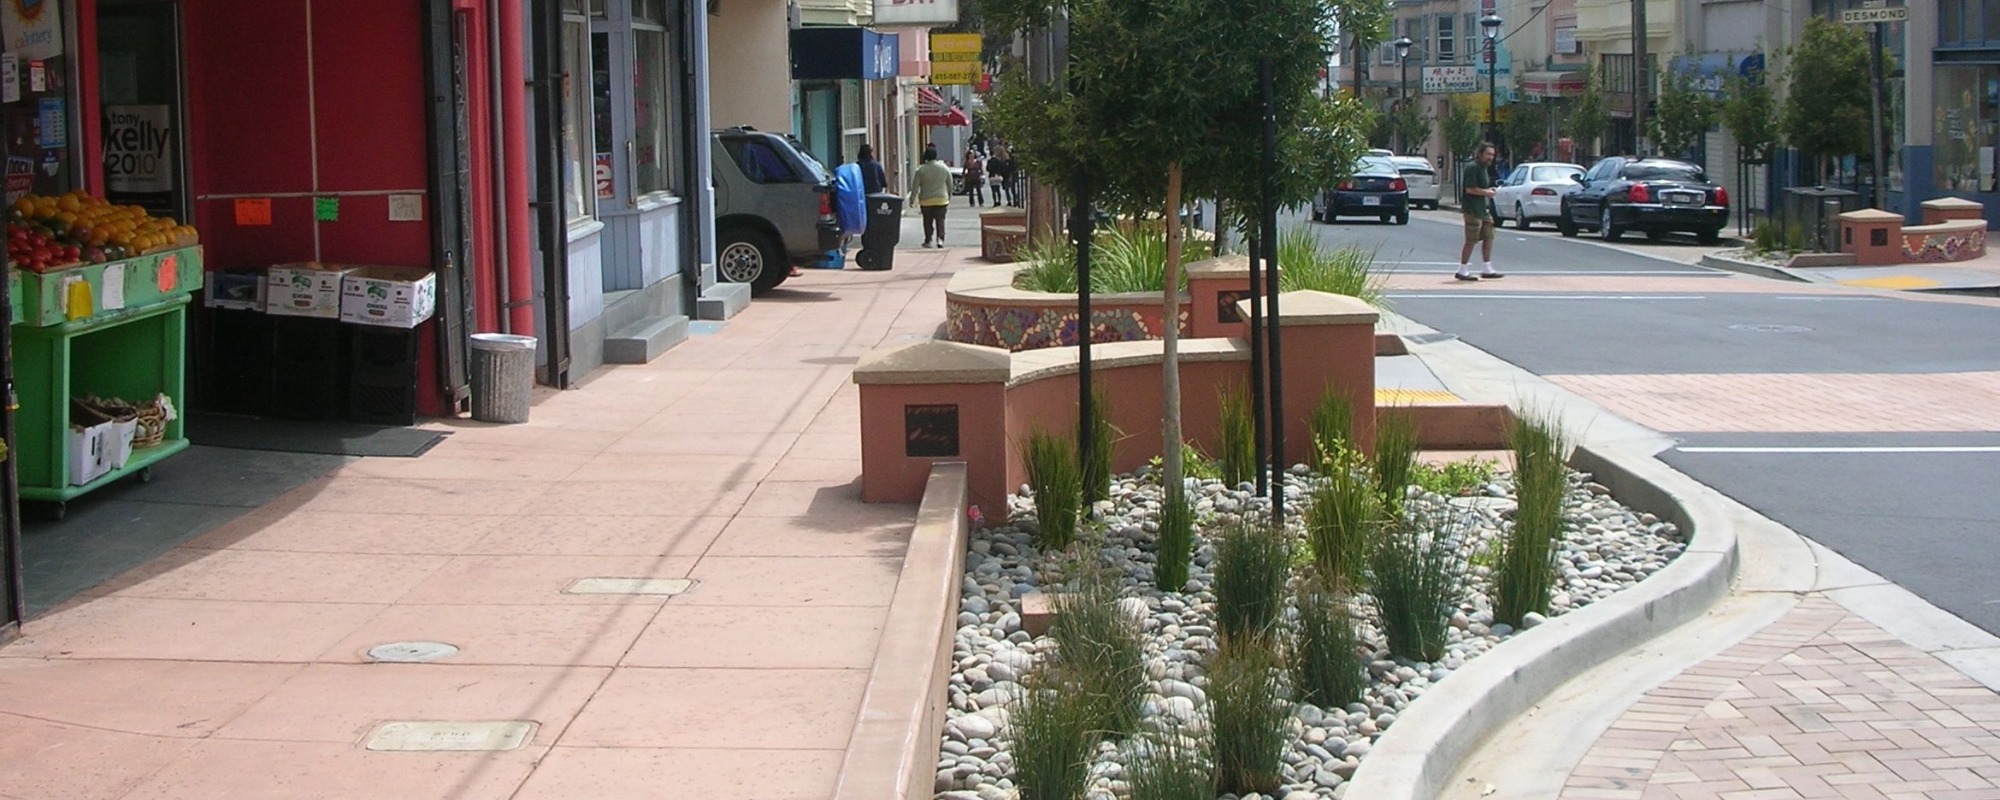 Leland Avenue Streetscape Improvement Project